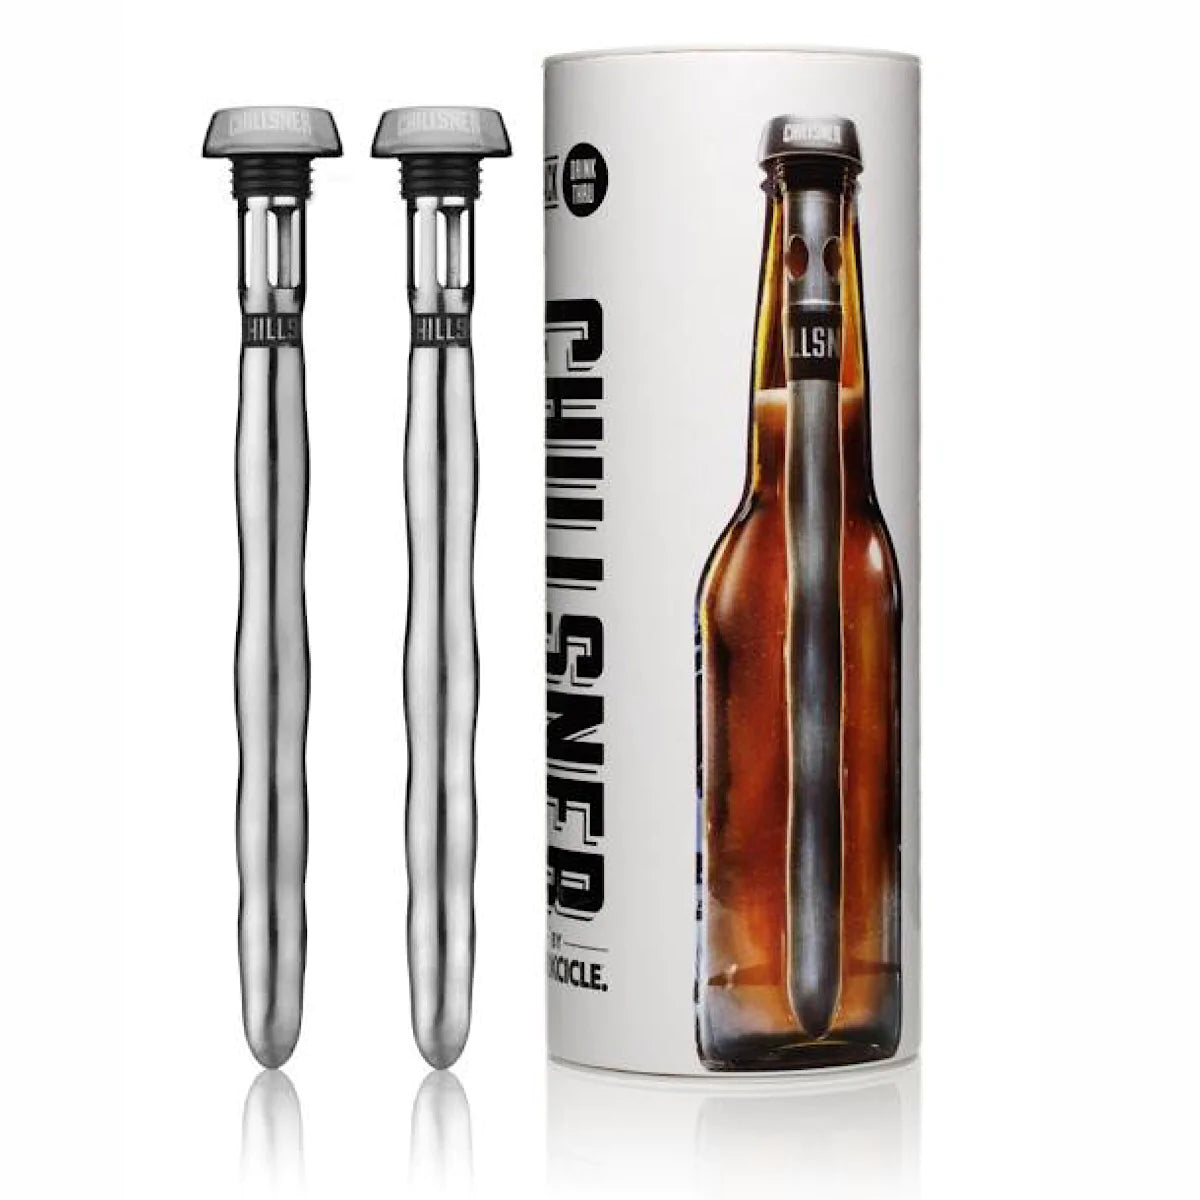 Chillsner by Corkcicle - 2 Pack - In-Bottle Beer Chiller - Keeps Beer Cool